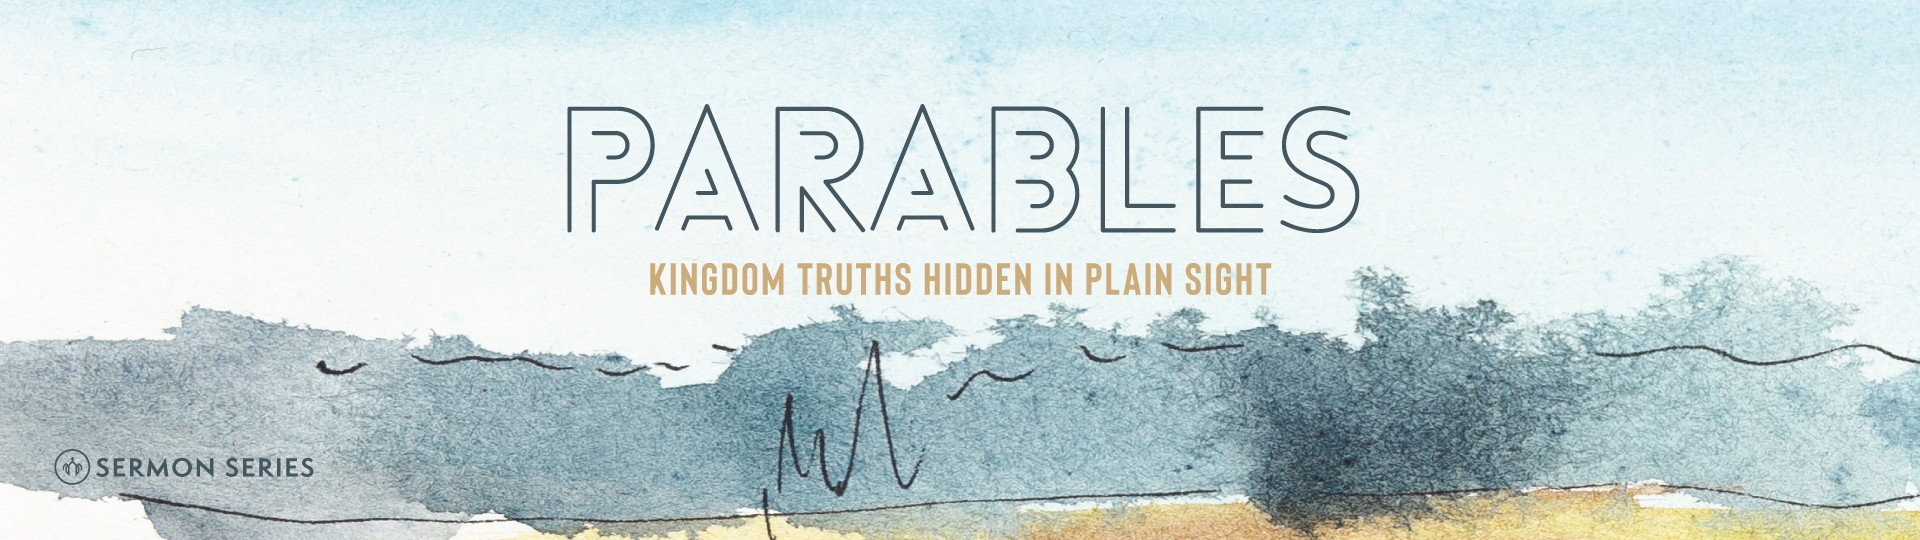 Parables - Kingdom truths hidden in plain sight